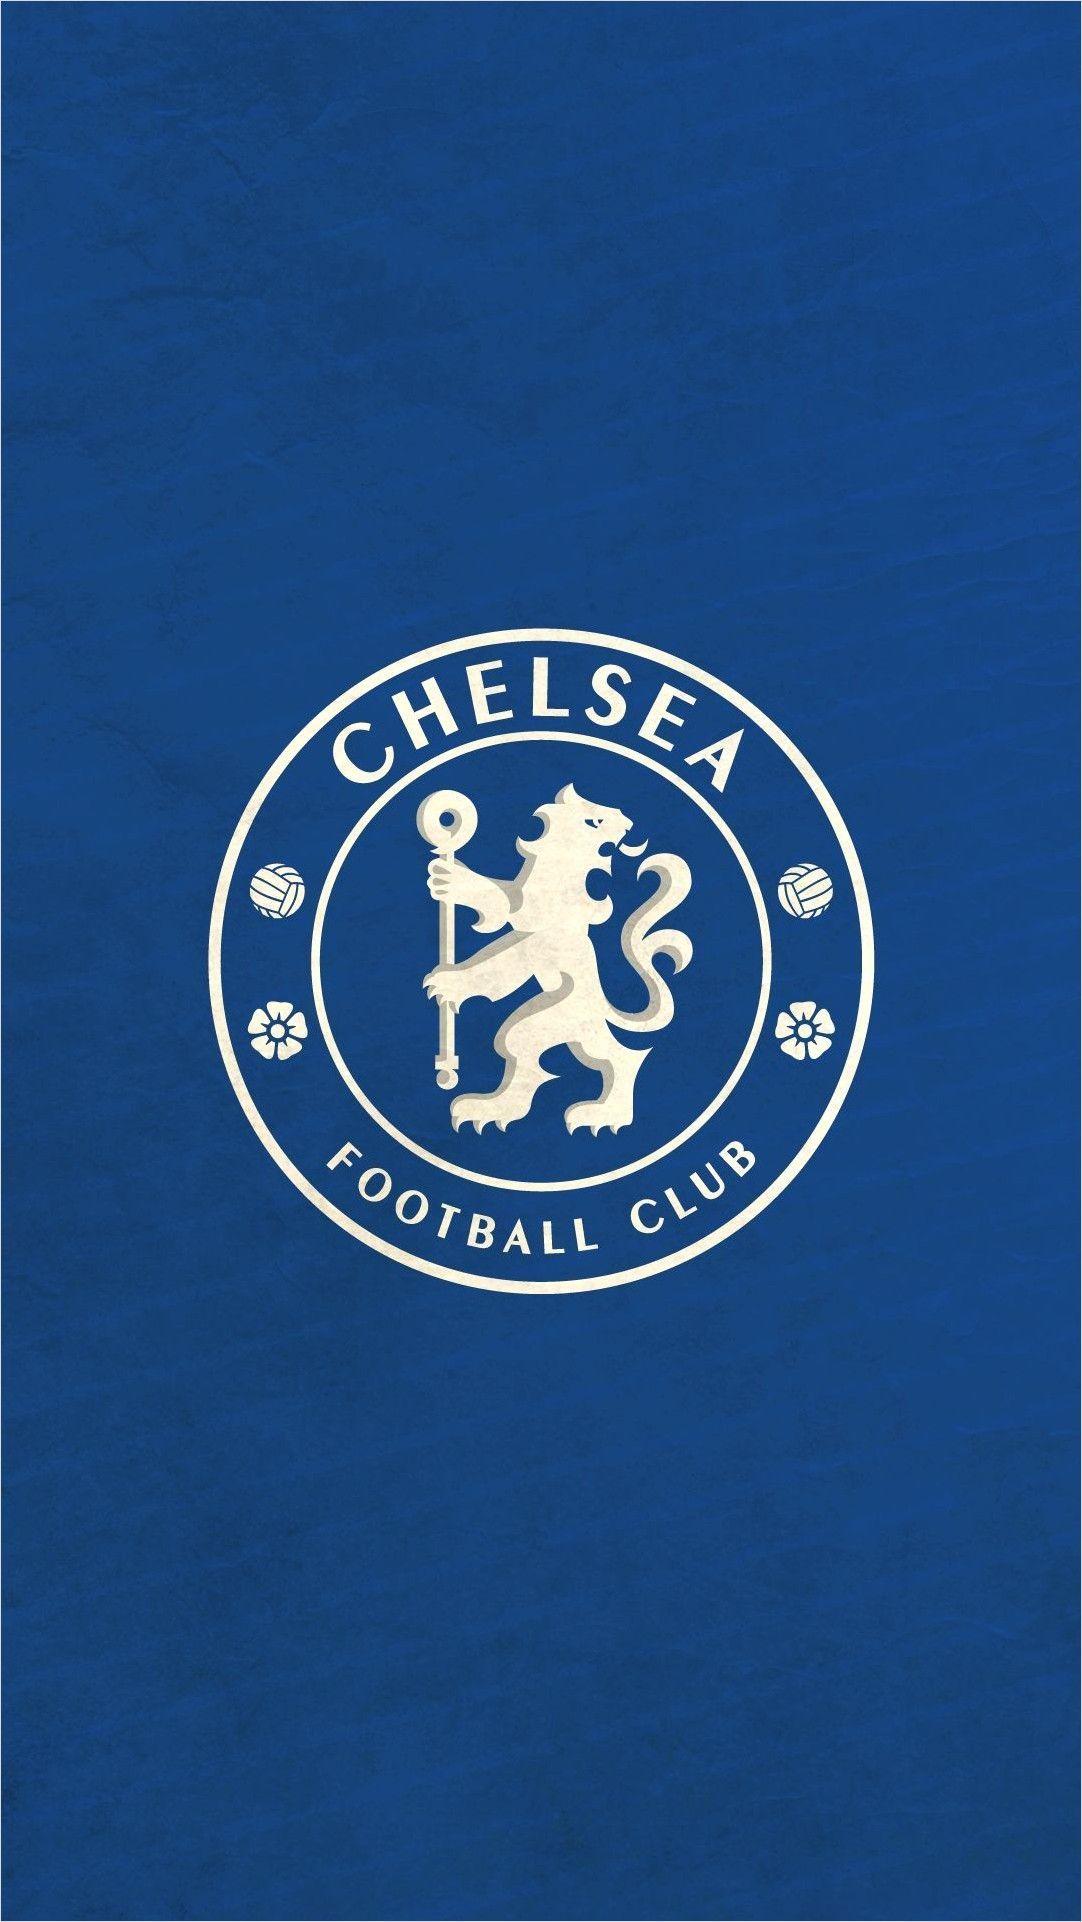 Chelsea 4k Phone Wallpapers - Top Free Chelsea 4k Phone Backgrounds ...